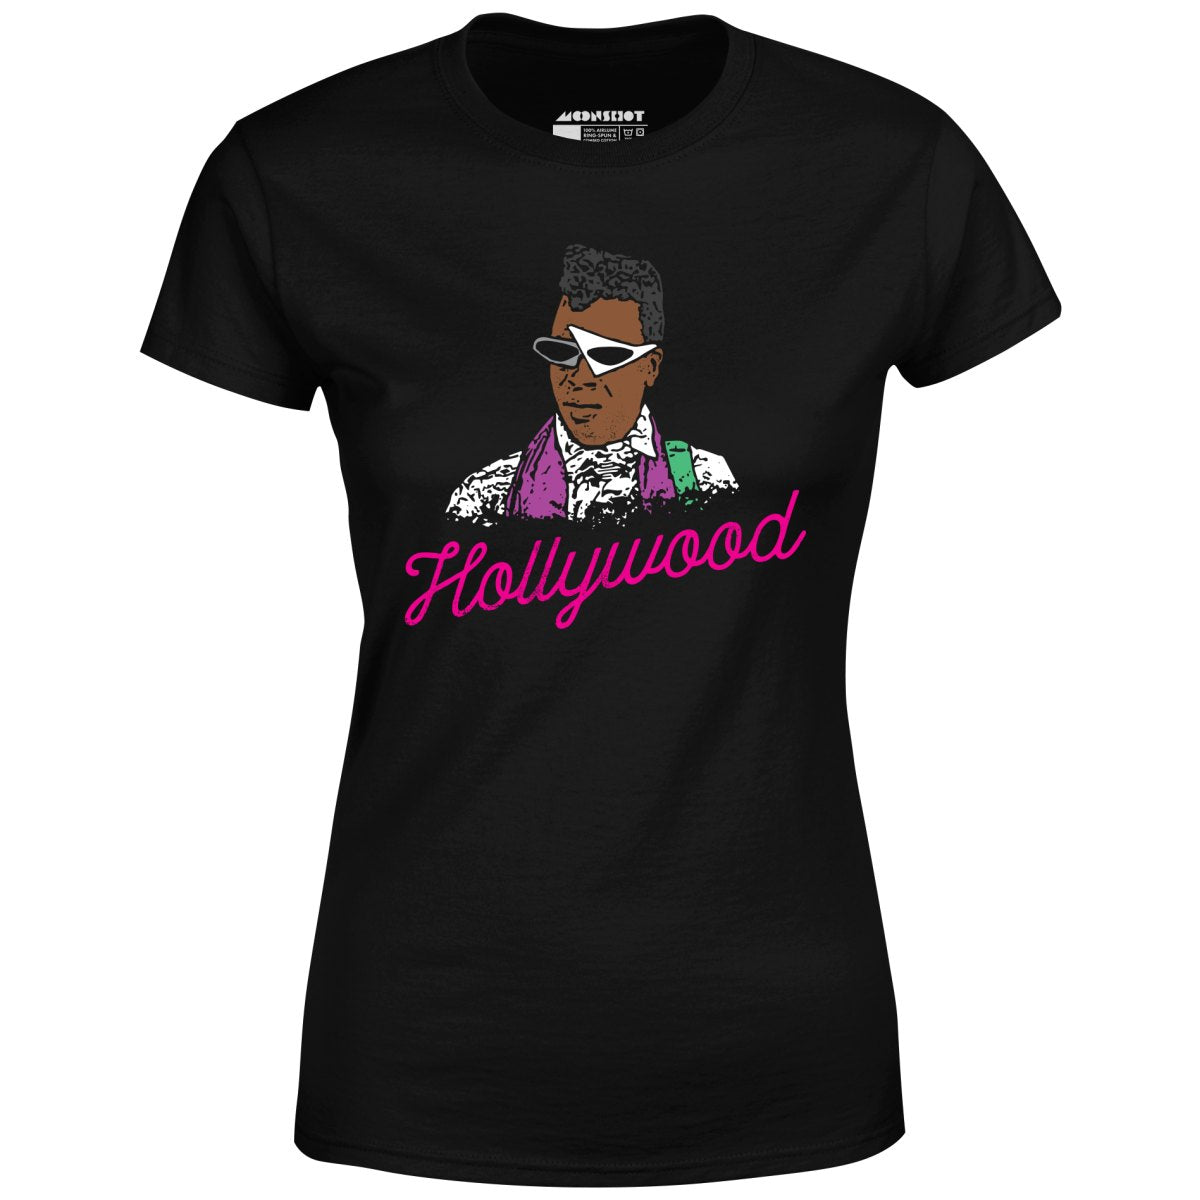 Hollywood - Mannequin - Women's T-Shirt